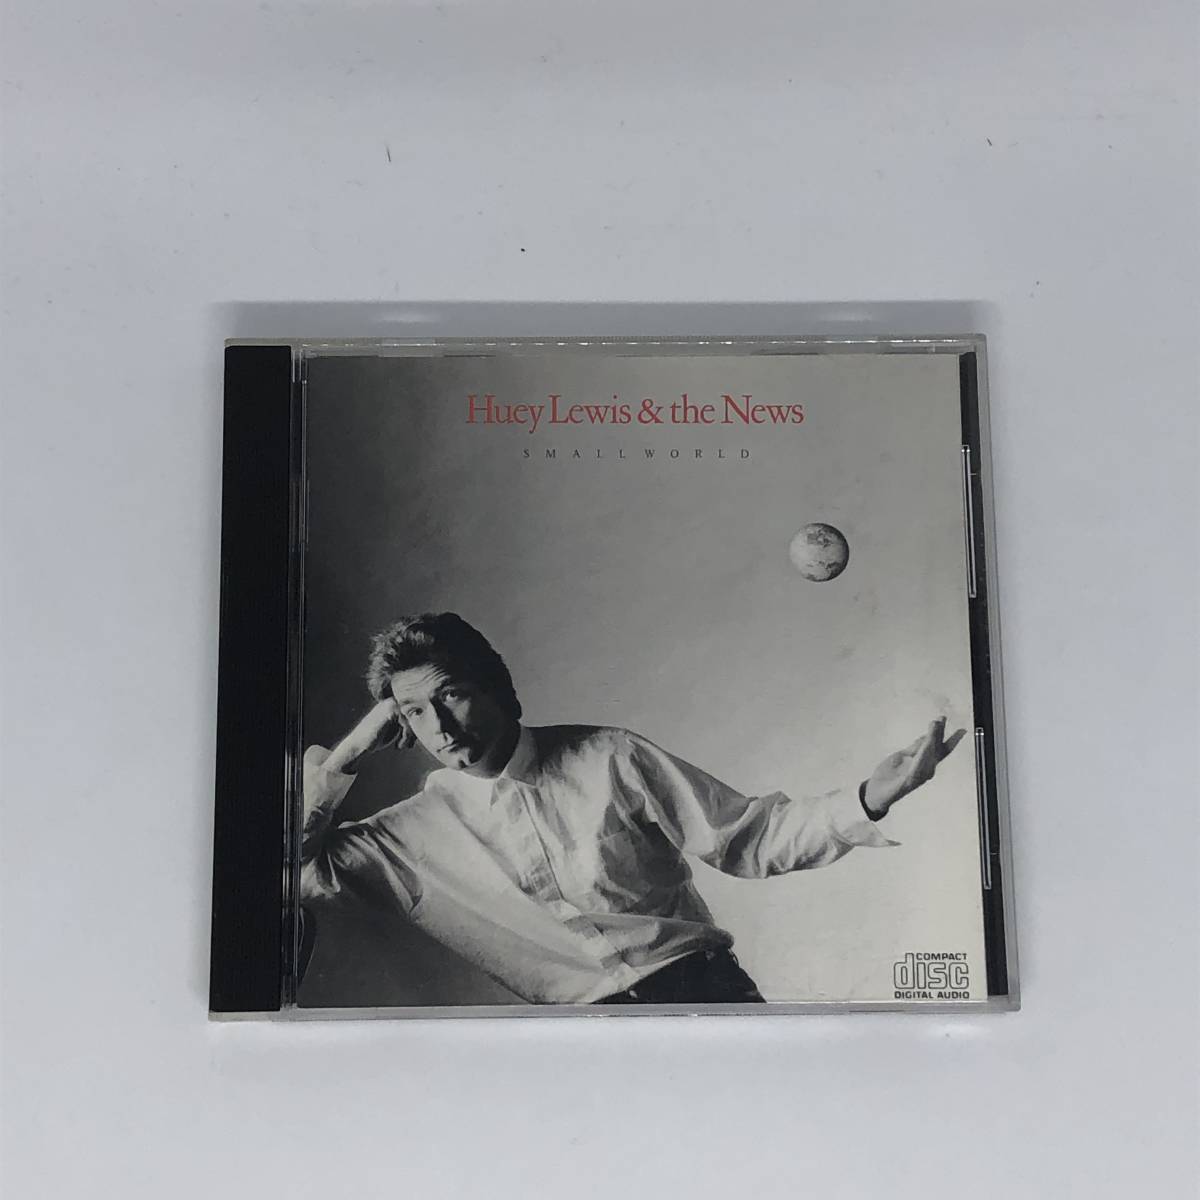 US盤 中古CD Huey Lewis & The News Small World ヒューイ・ルイス スモール・ワールド Chrysalis VK 41622_画像1